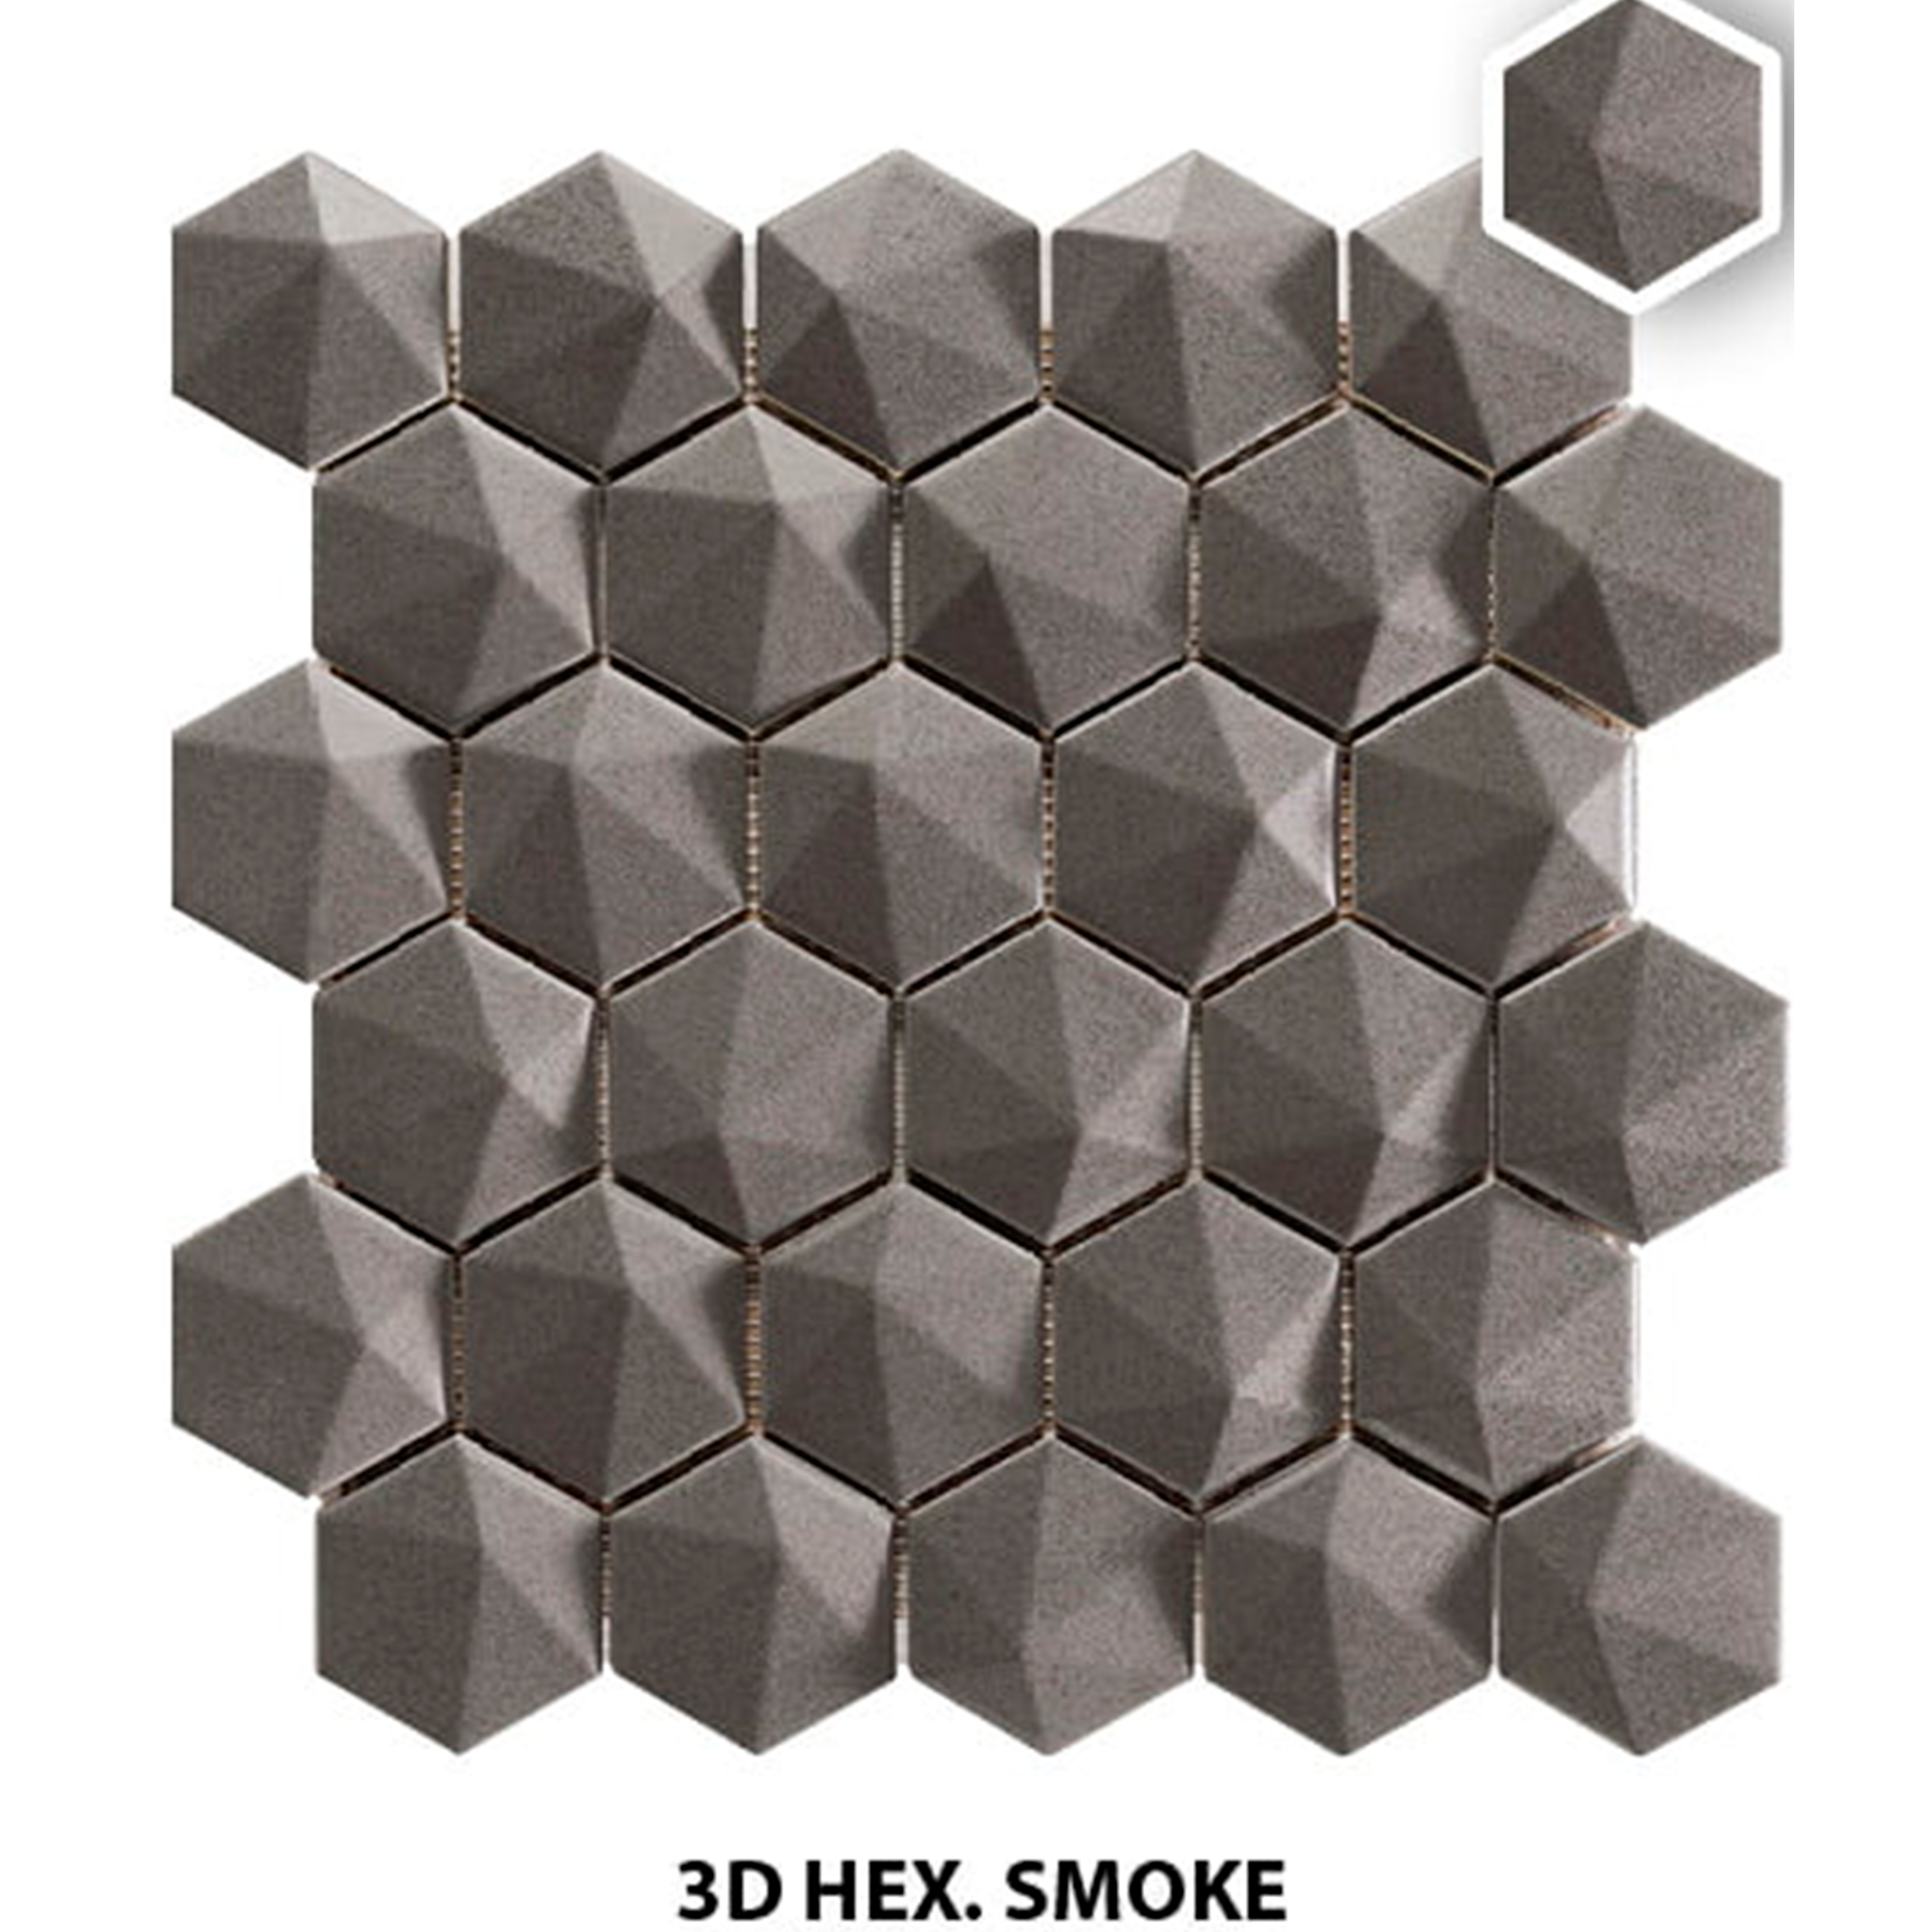 3Dhex Smoke